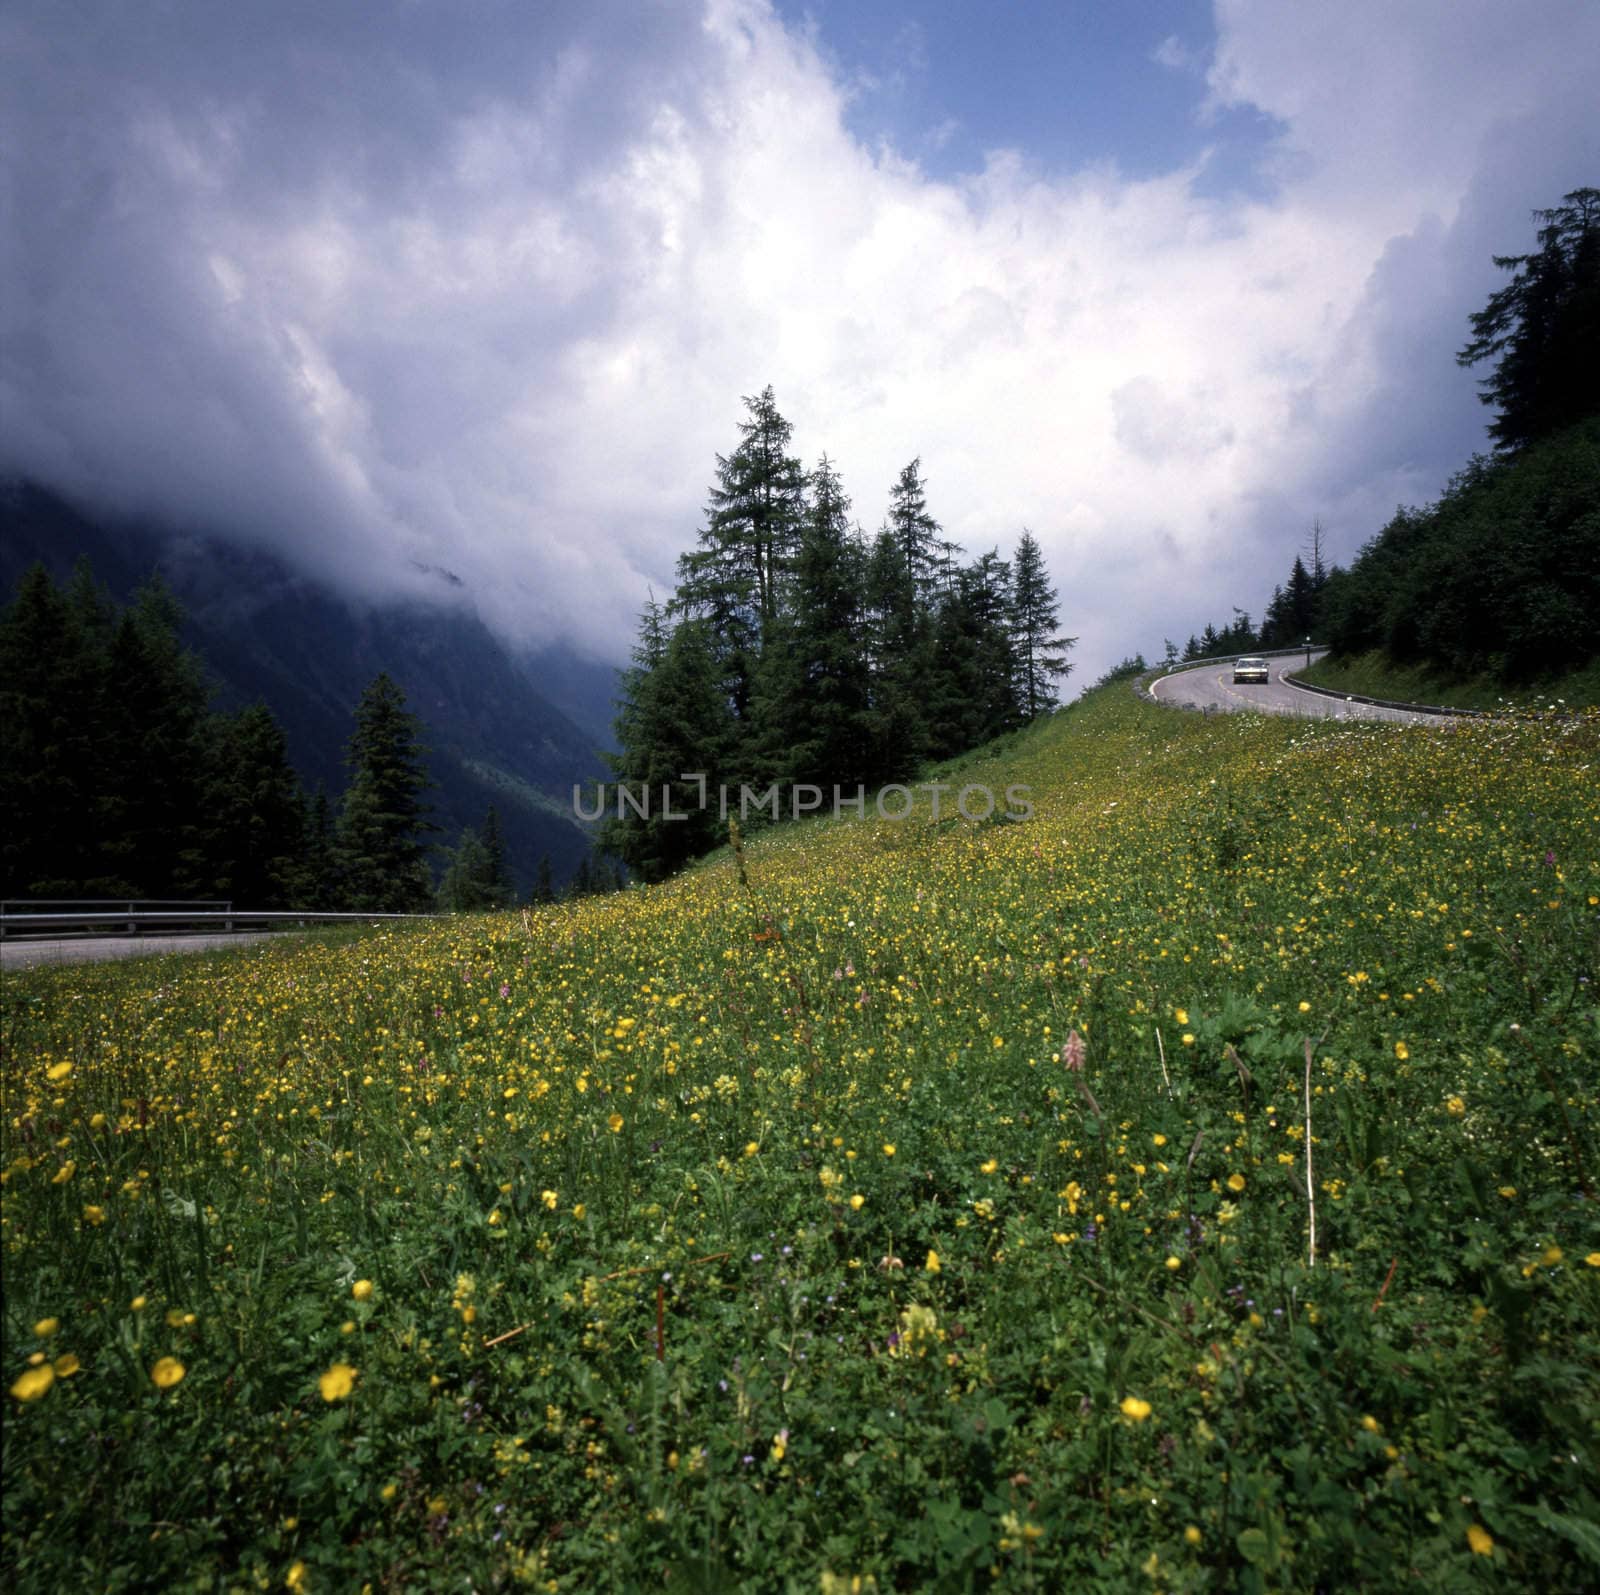 Alpine road by jol66